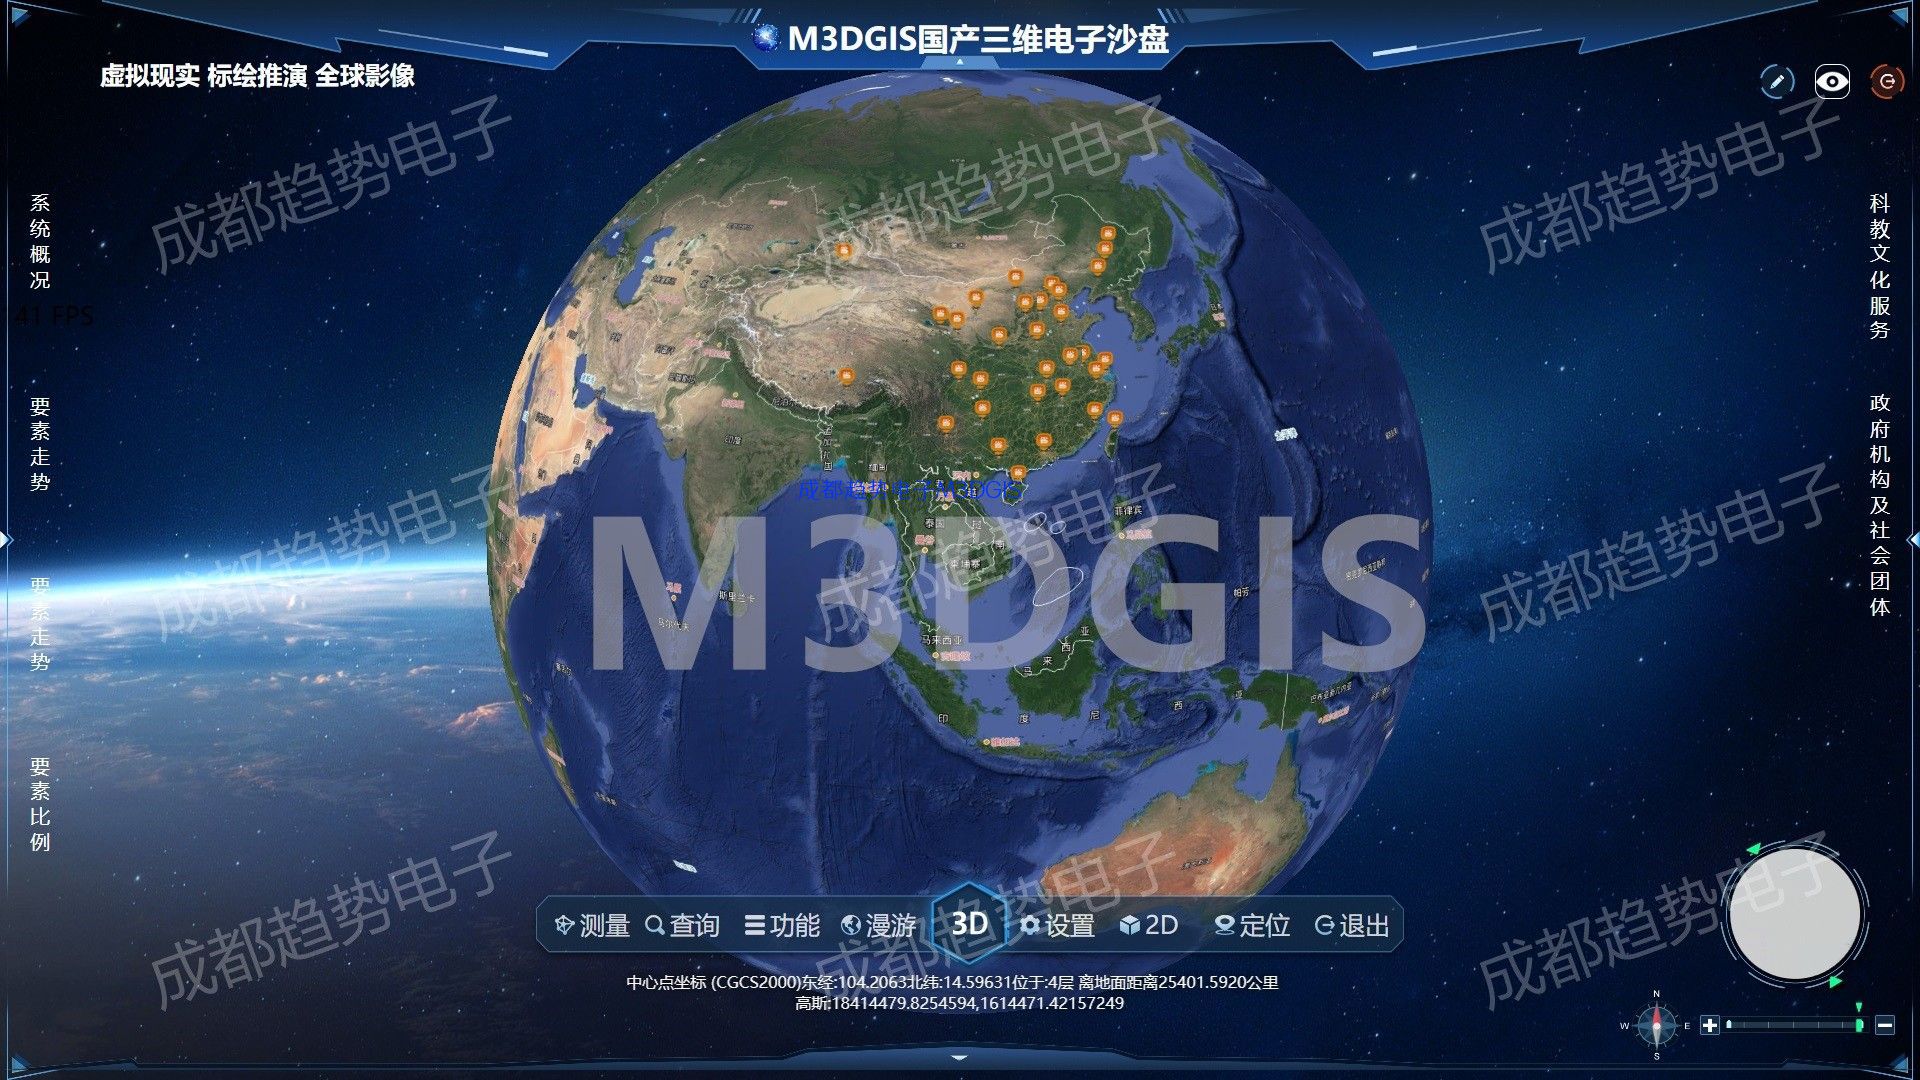 M3DGIS国产电子沙盘宣传视频